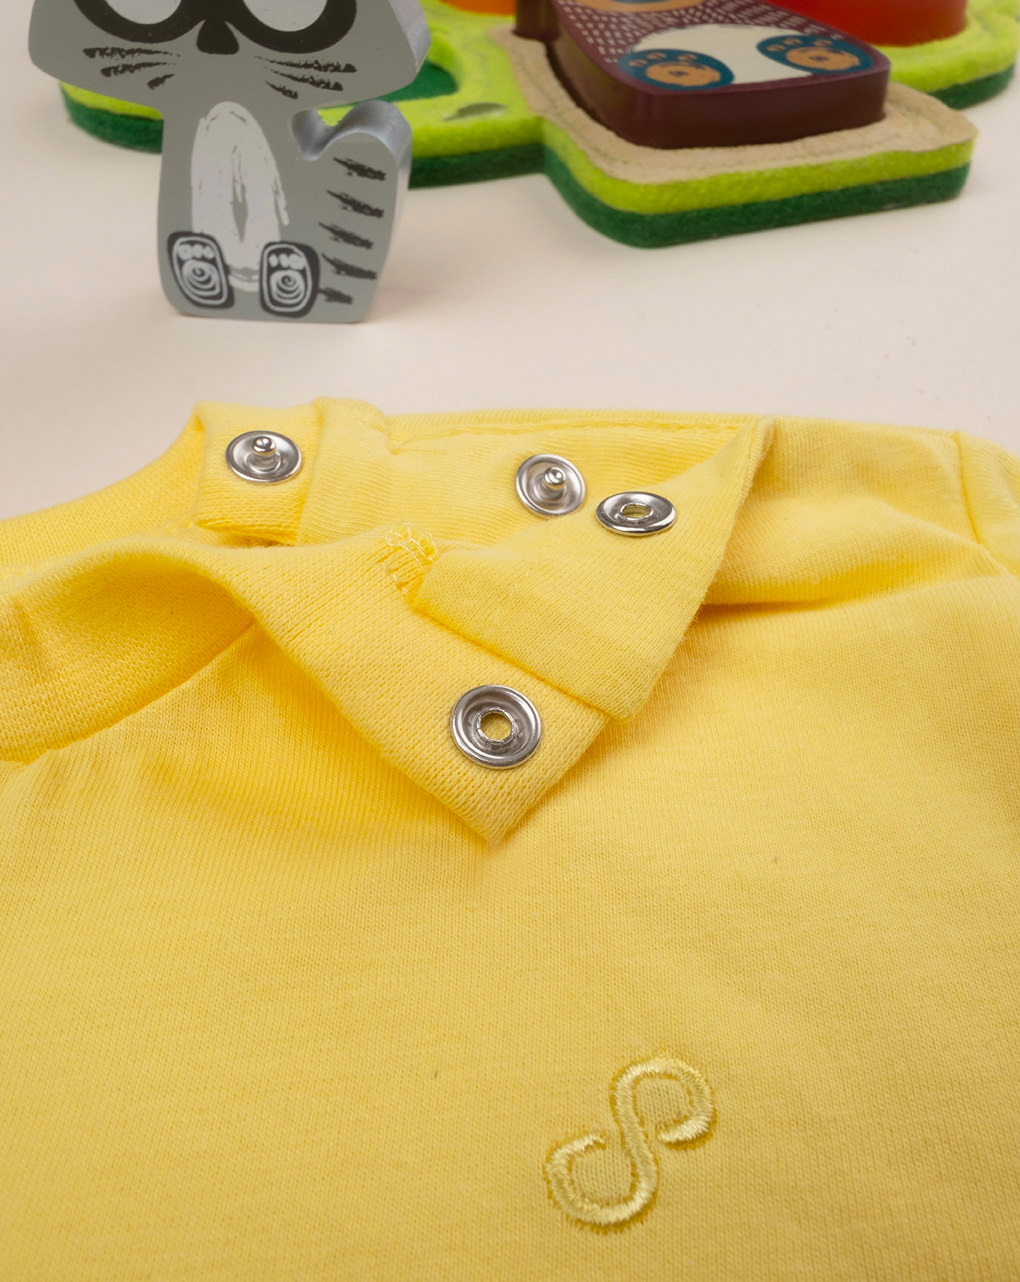 Camiseta amarilla de manga corta para bebé - Prénatal